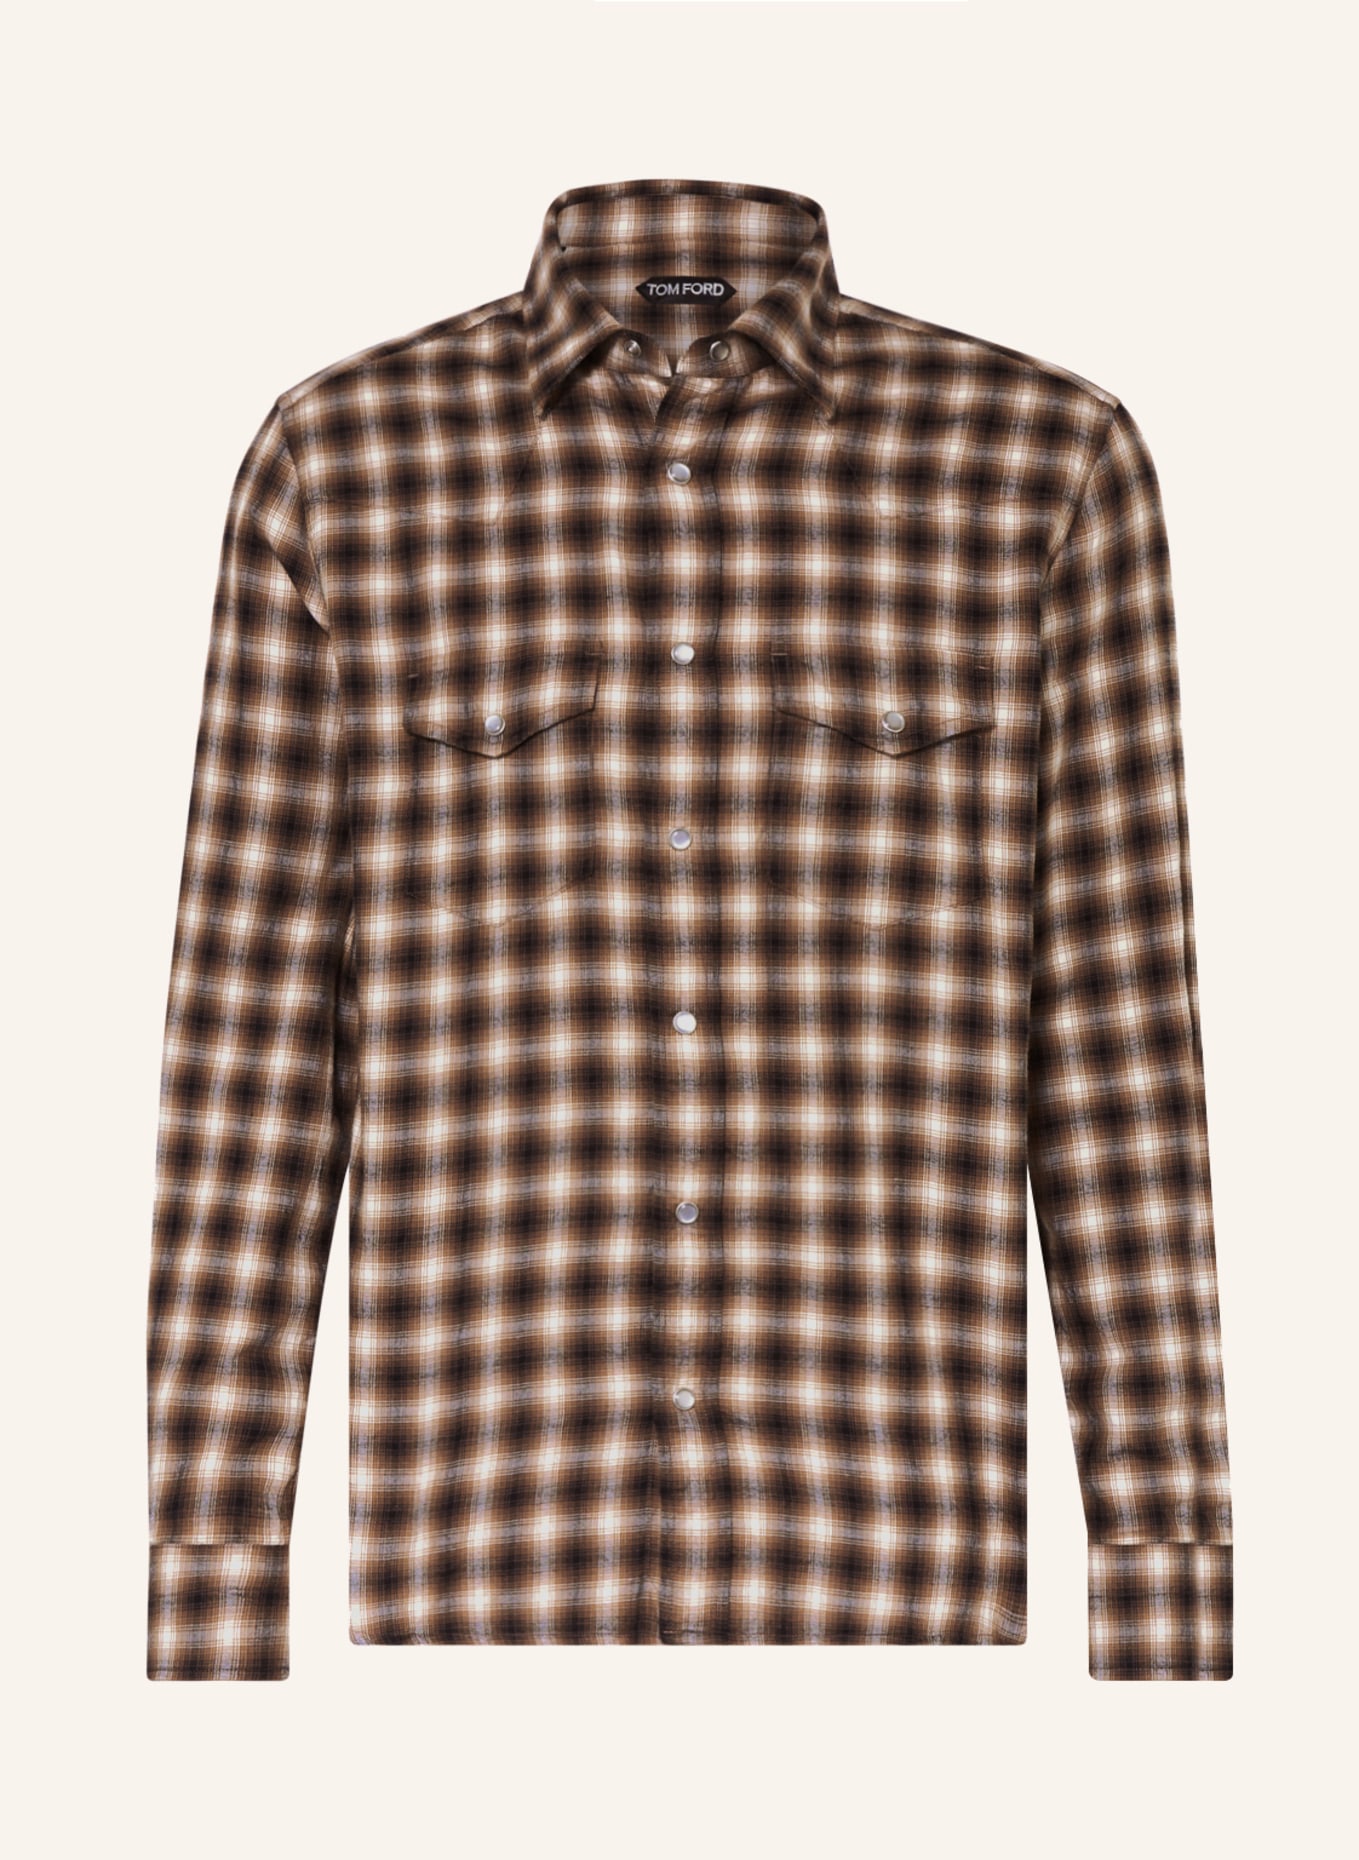 TOM FORD Flannel shirt regular fit, Color: BROWN/ LIGHT BROWN/ DARK GRAY (Image 1)